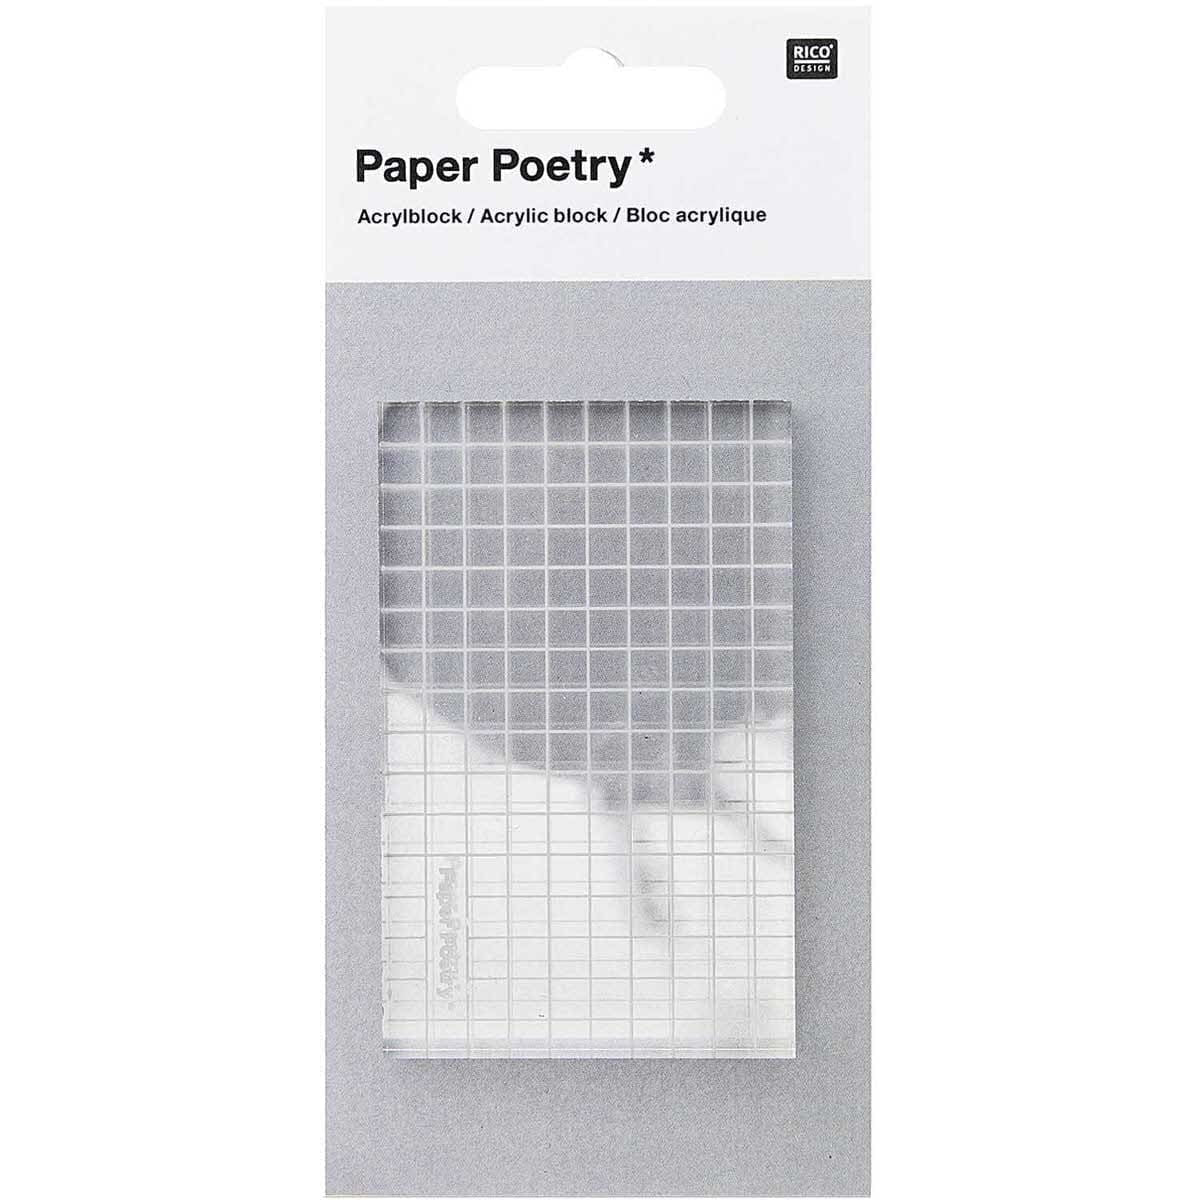 Akrylblock Paper Poetry - Rico Design - Tidformera